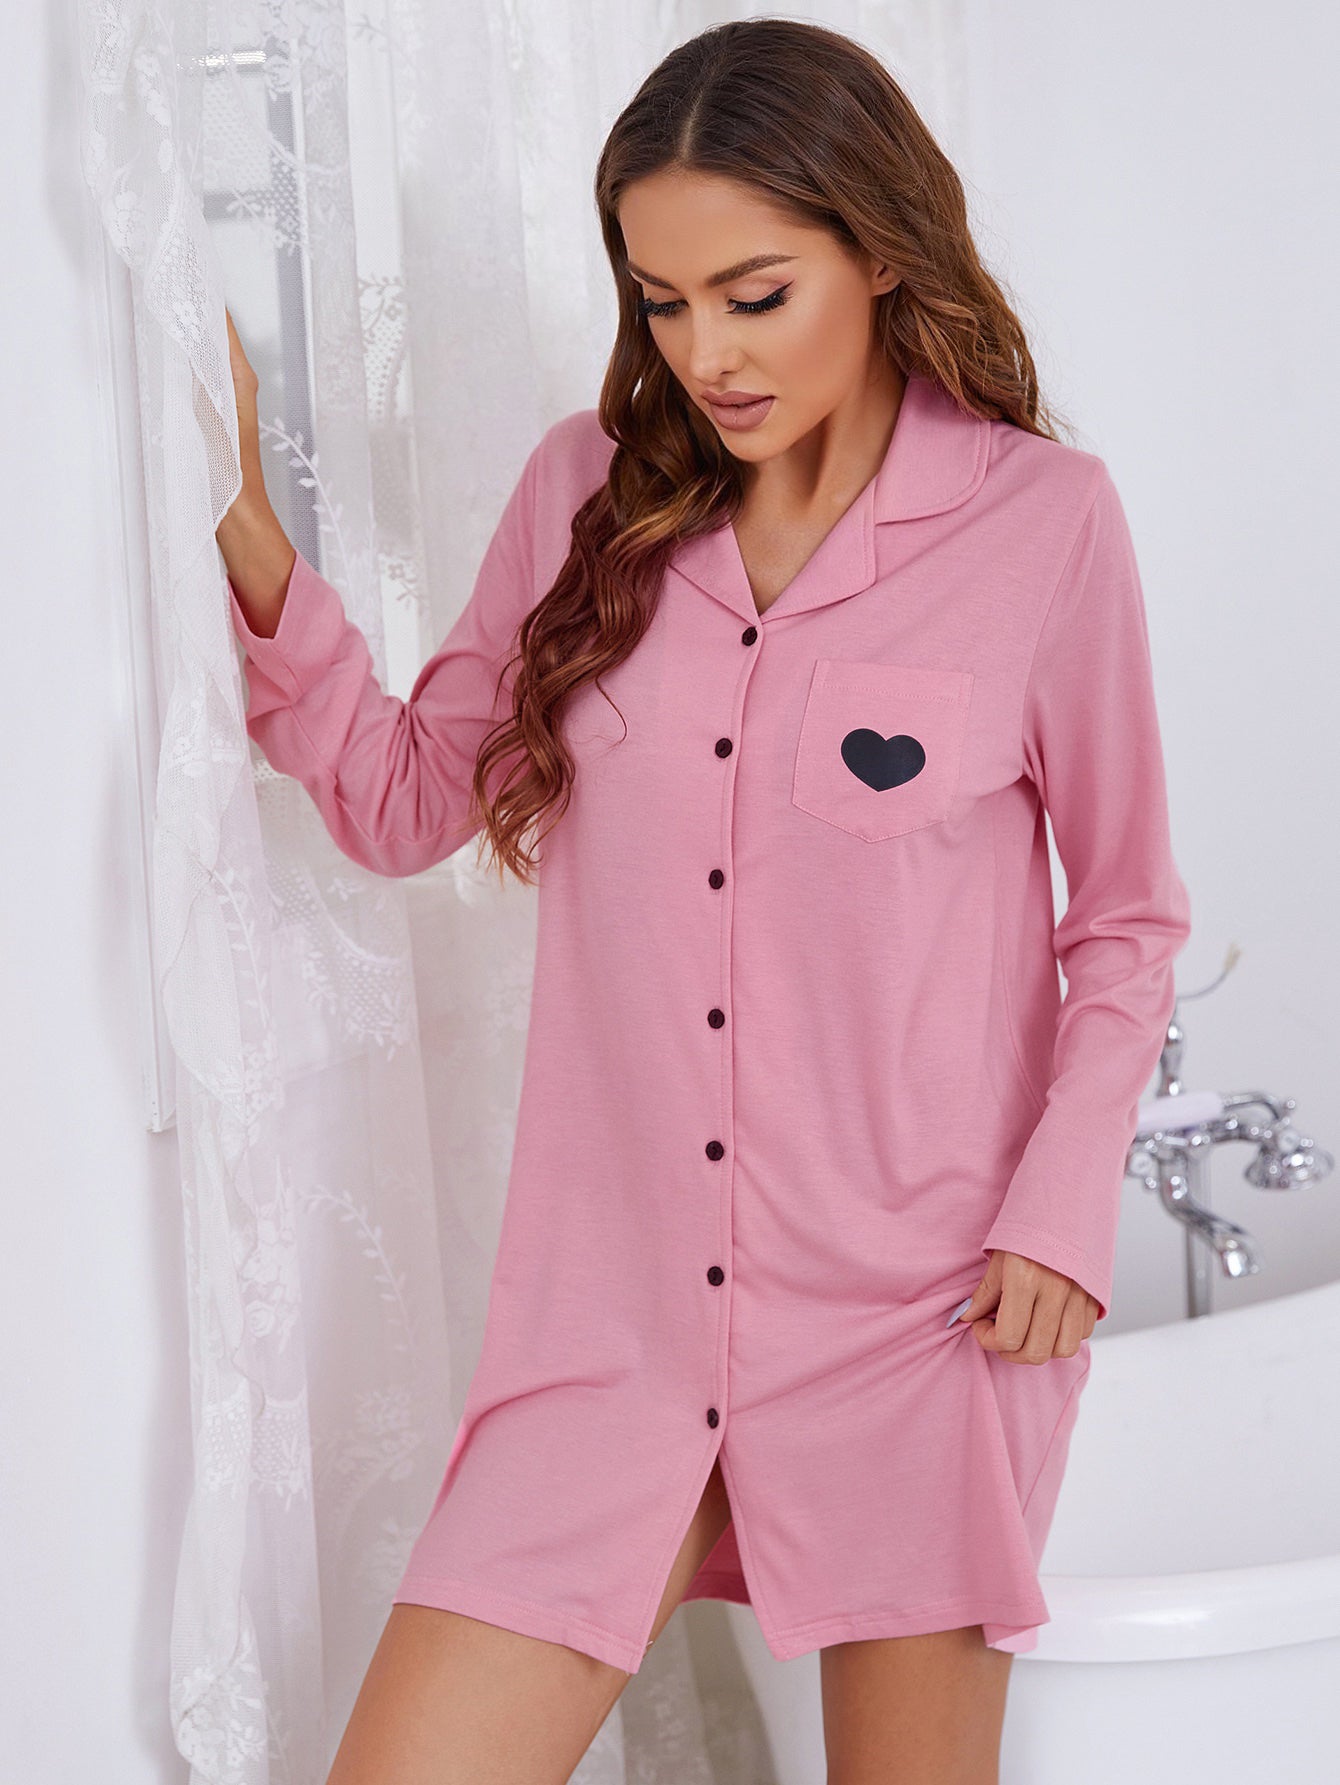 Womens Long Sleeve  Casual Cute Loungewear,Spring Autumn Summer Soft Comfortable Nightshirt nightgown sleepwear Sai Feel